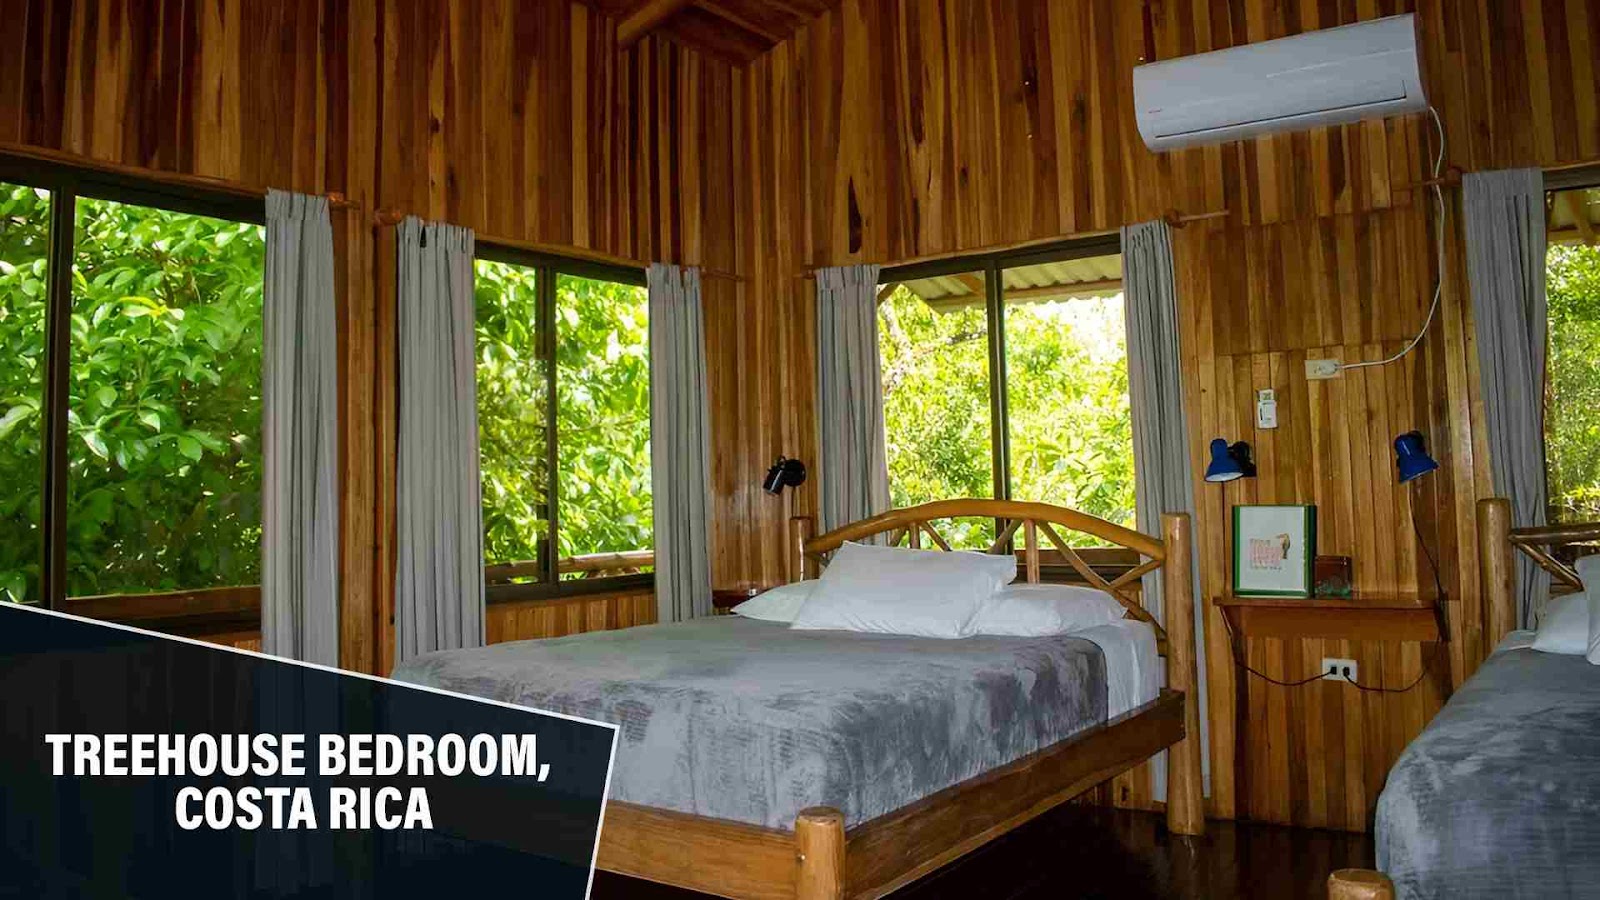 Treehouse Bedroom, Costa Rica: